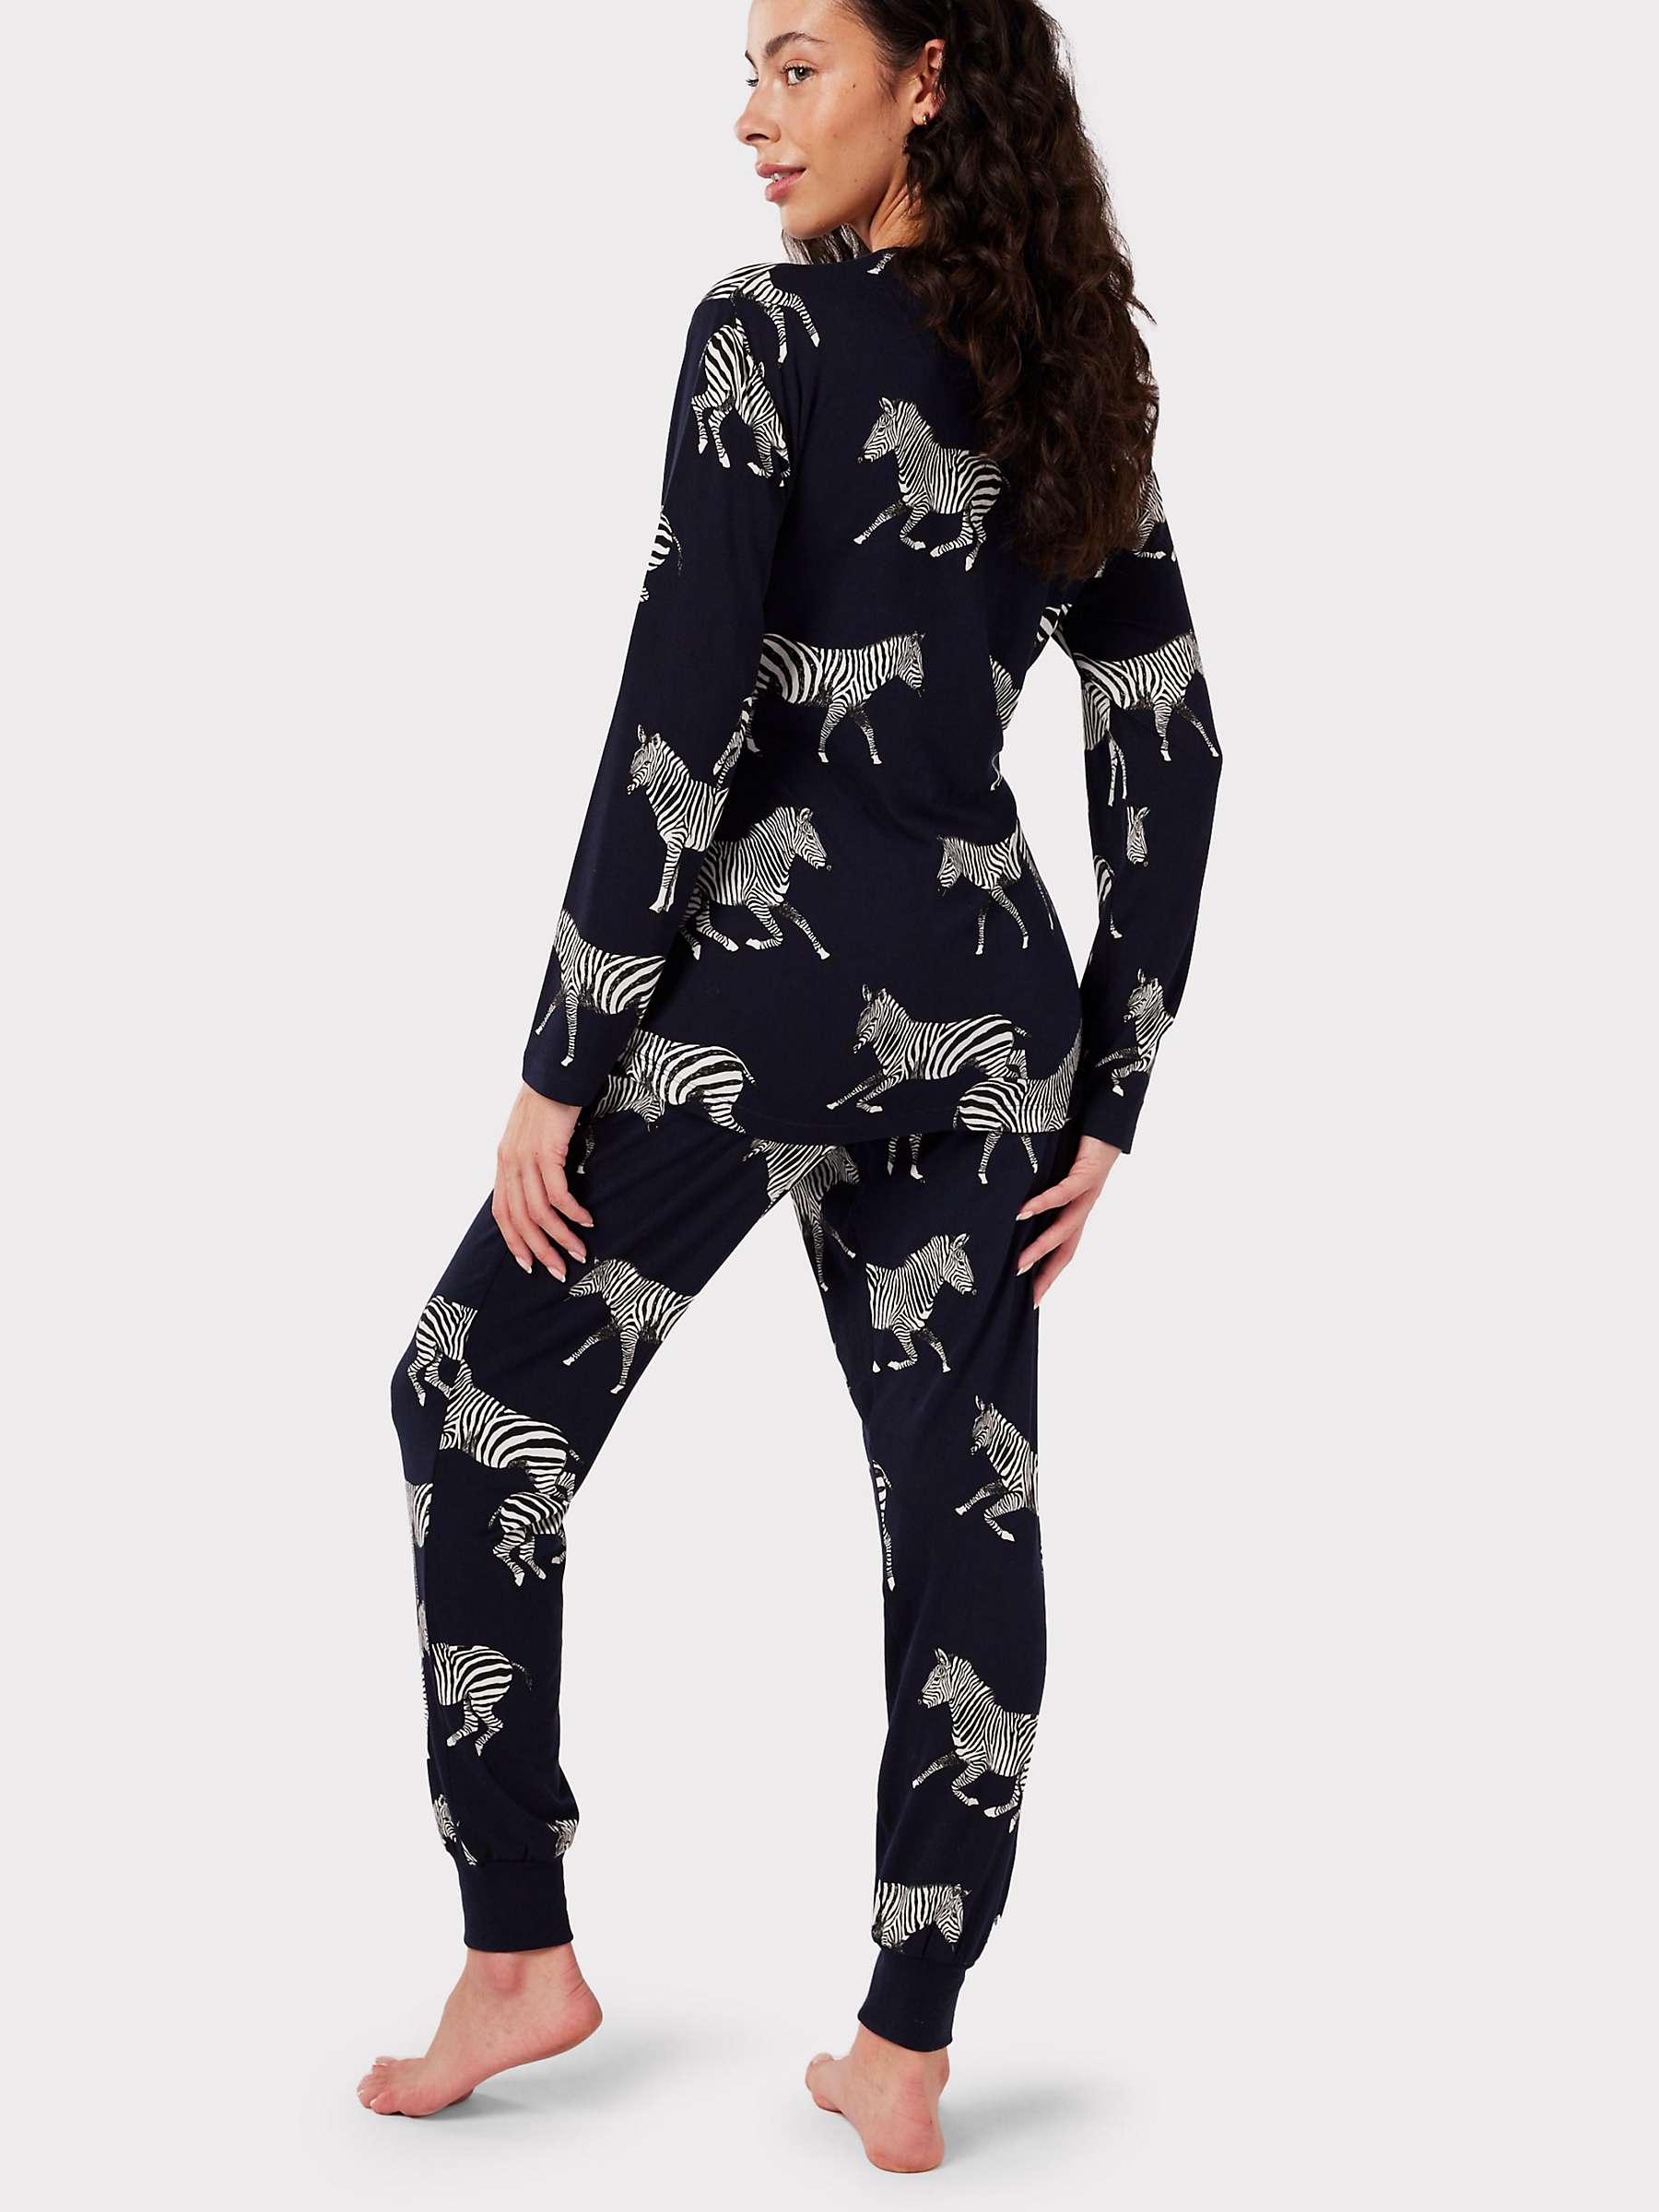 Buy Chelsea Peers Zebra Jersey Maternity Pyjama Set, Navy Online at johnlewis.com